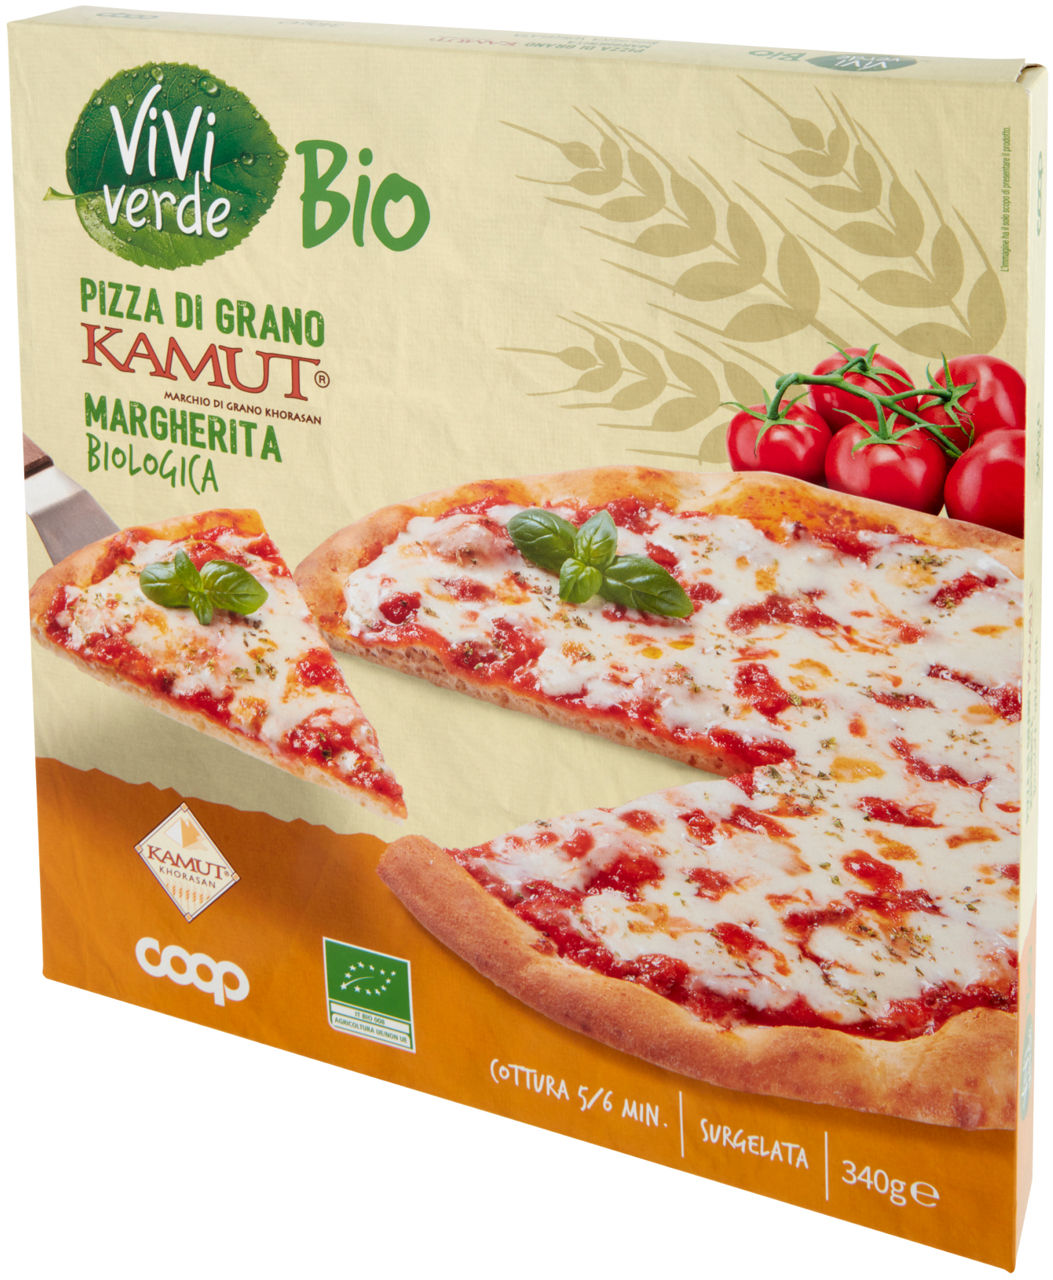 pizza di grano Kamut margherita Biologica surgelata Vivi Verde 340 g - 6